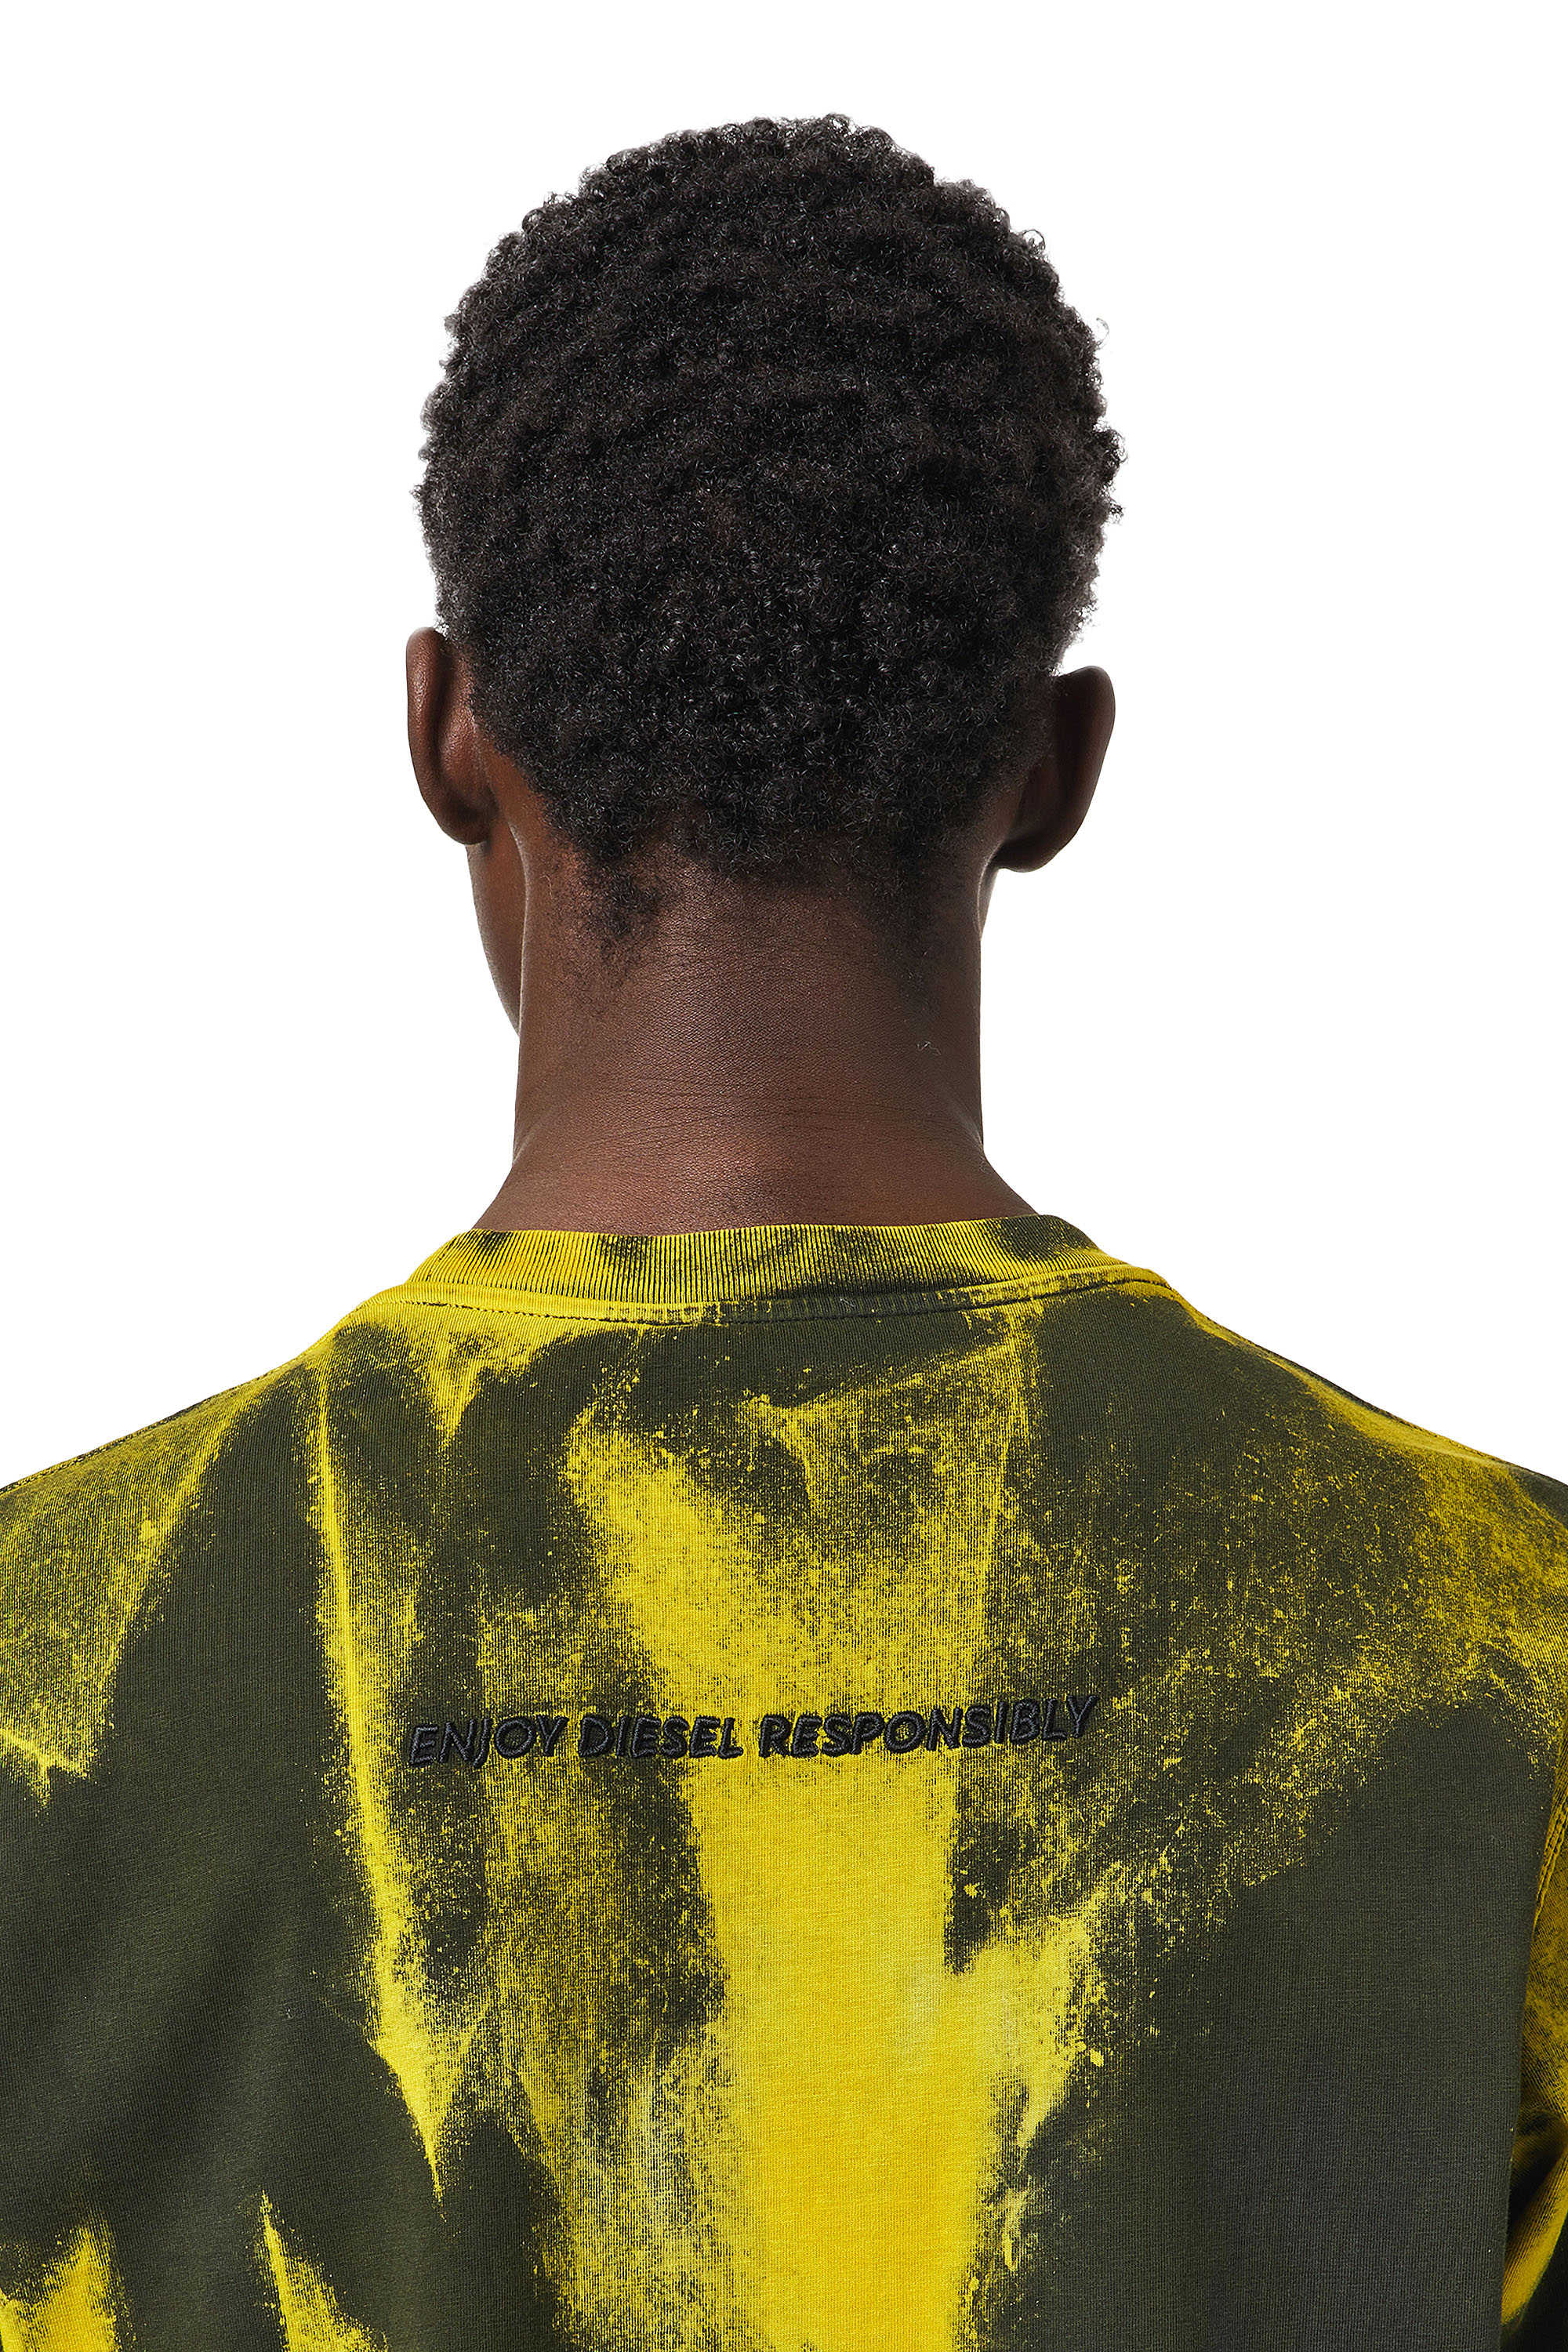 T-JUST-B84 Man: Green Label overdyed T-shirt | Diesel